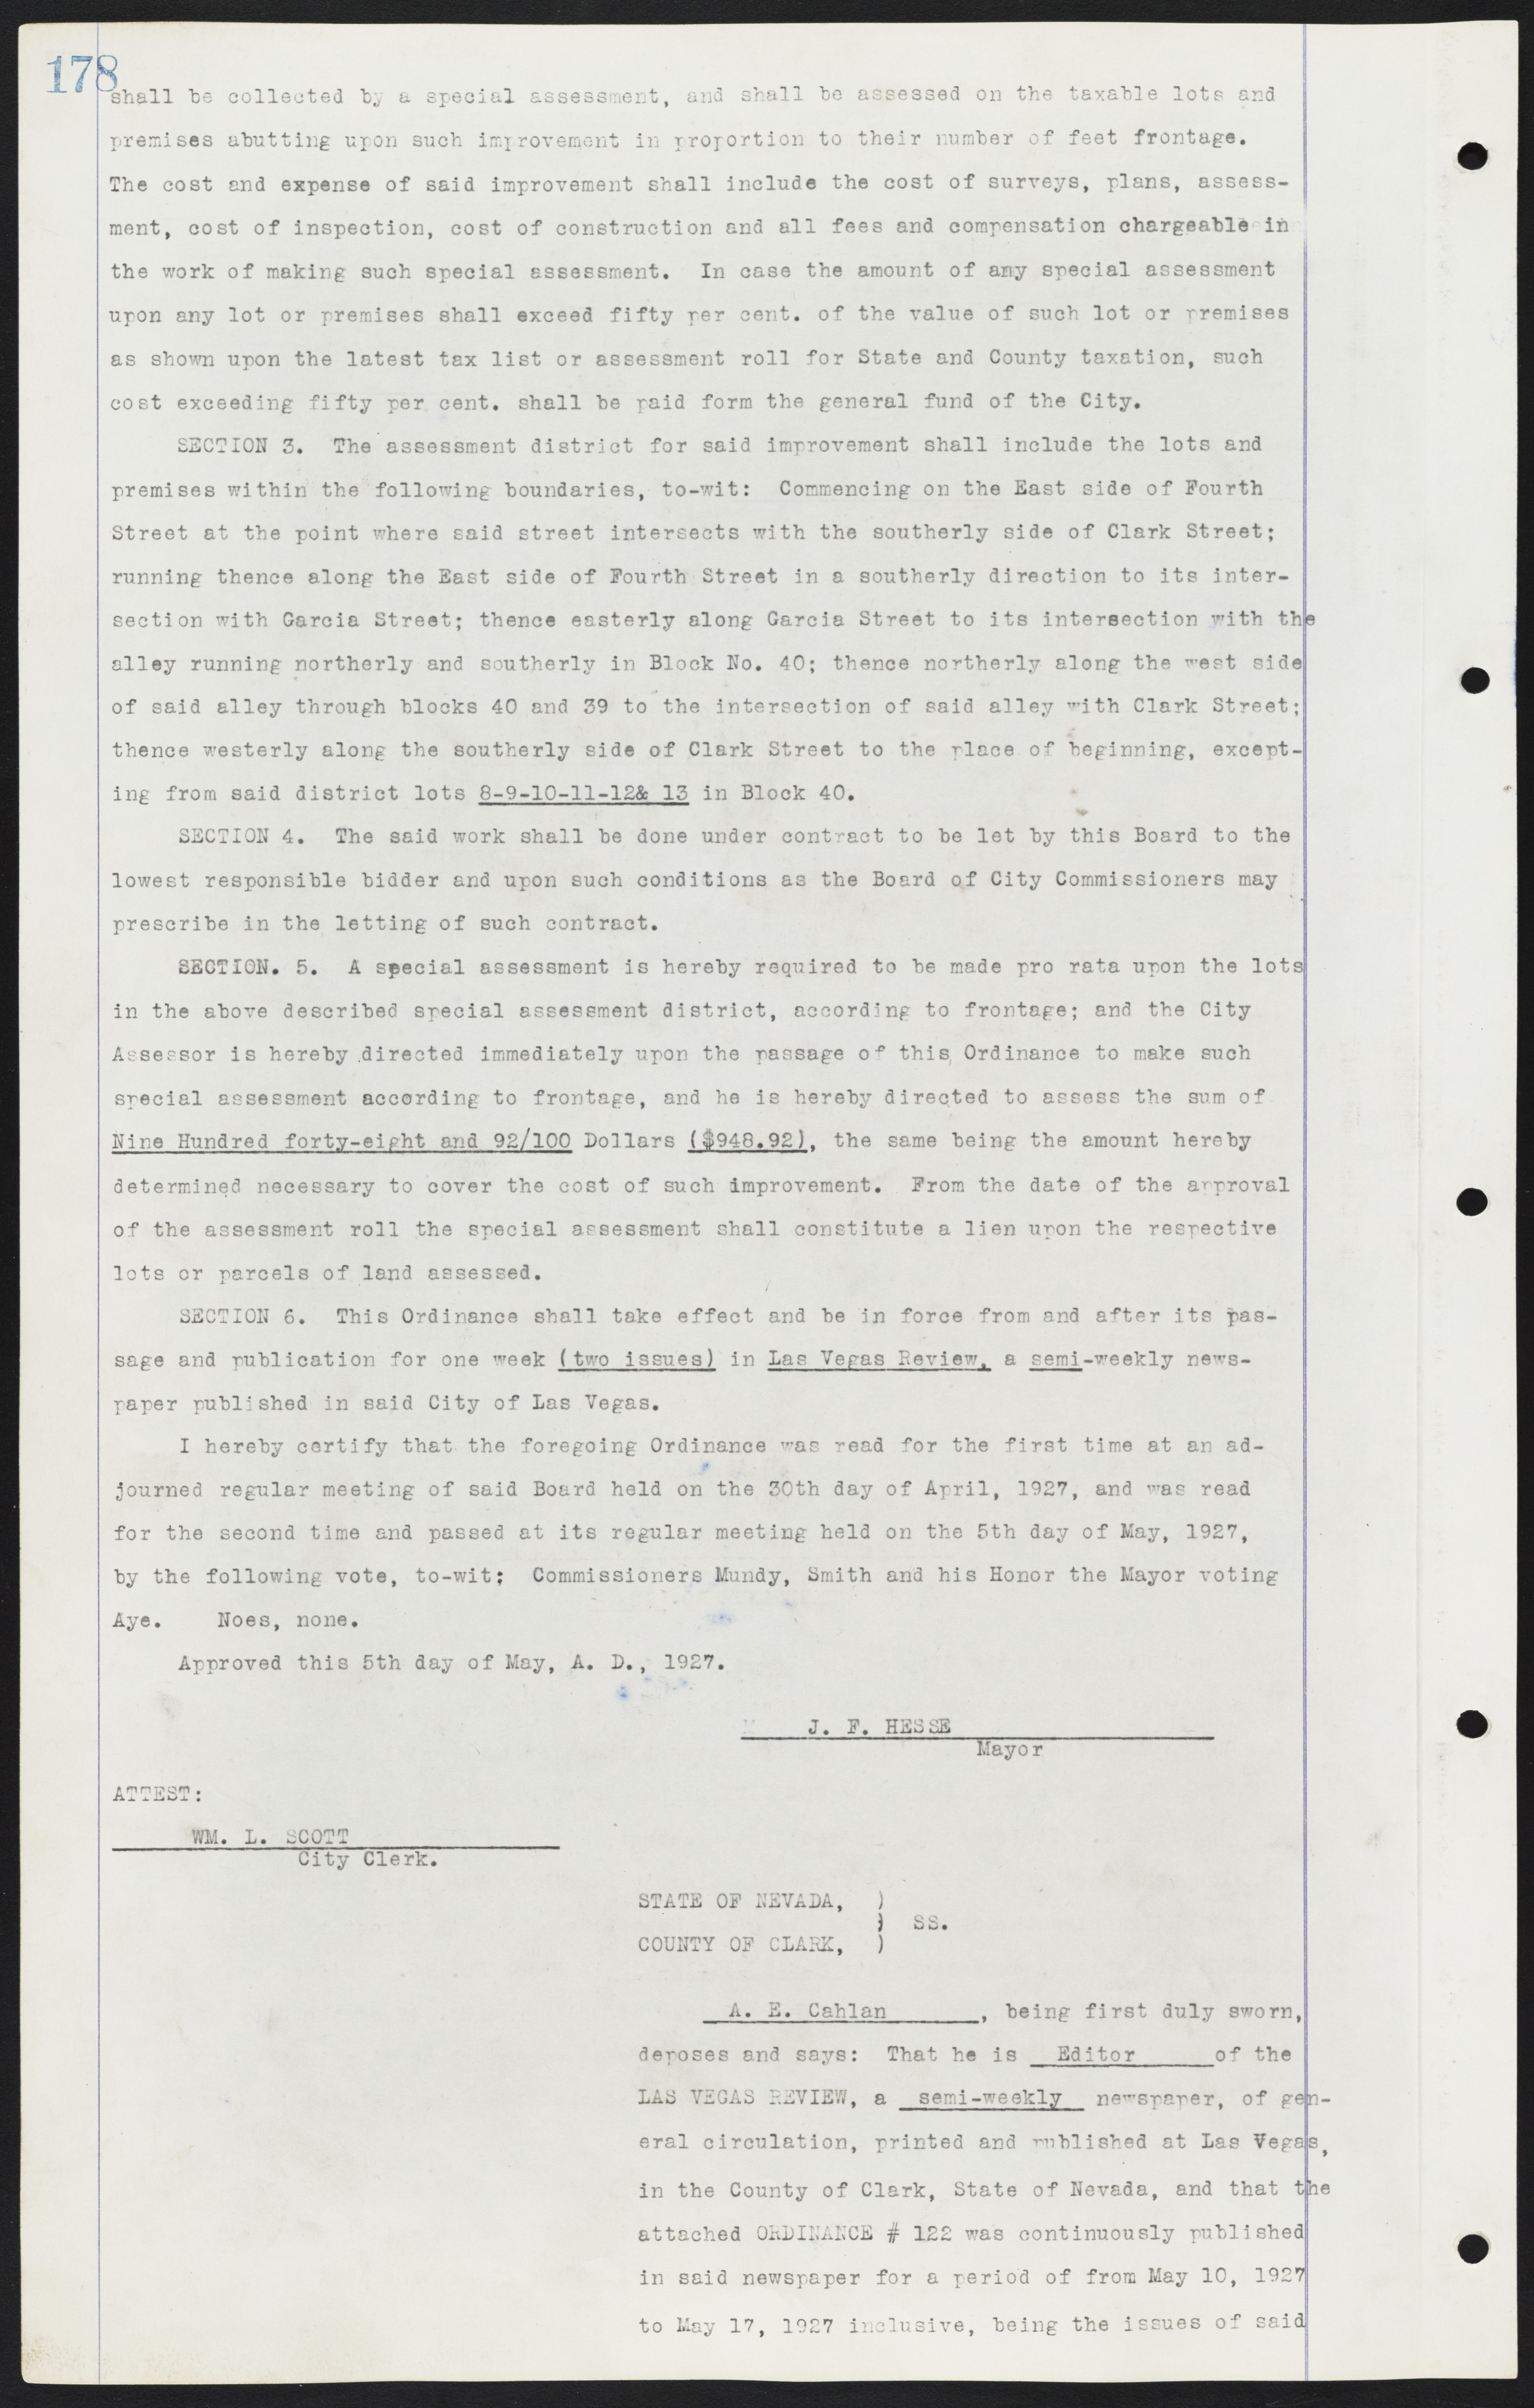 Las Vegas City Ordinances, July 18, 1911 to March 31, 1933, lvc000013-182